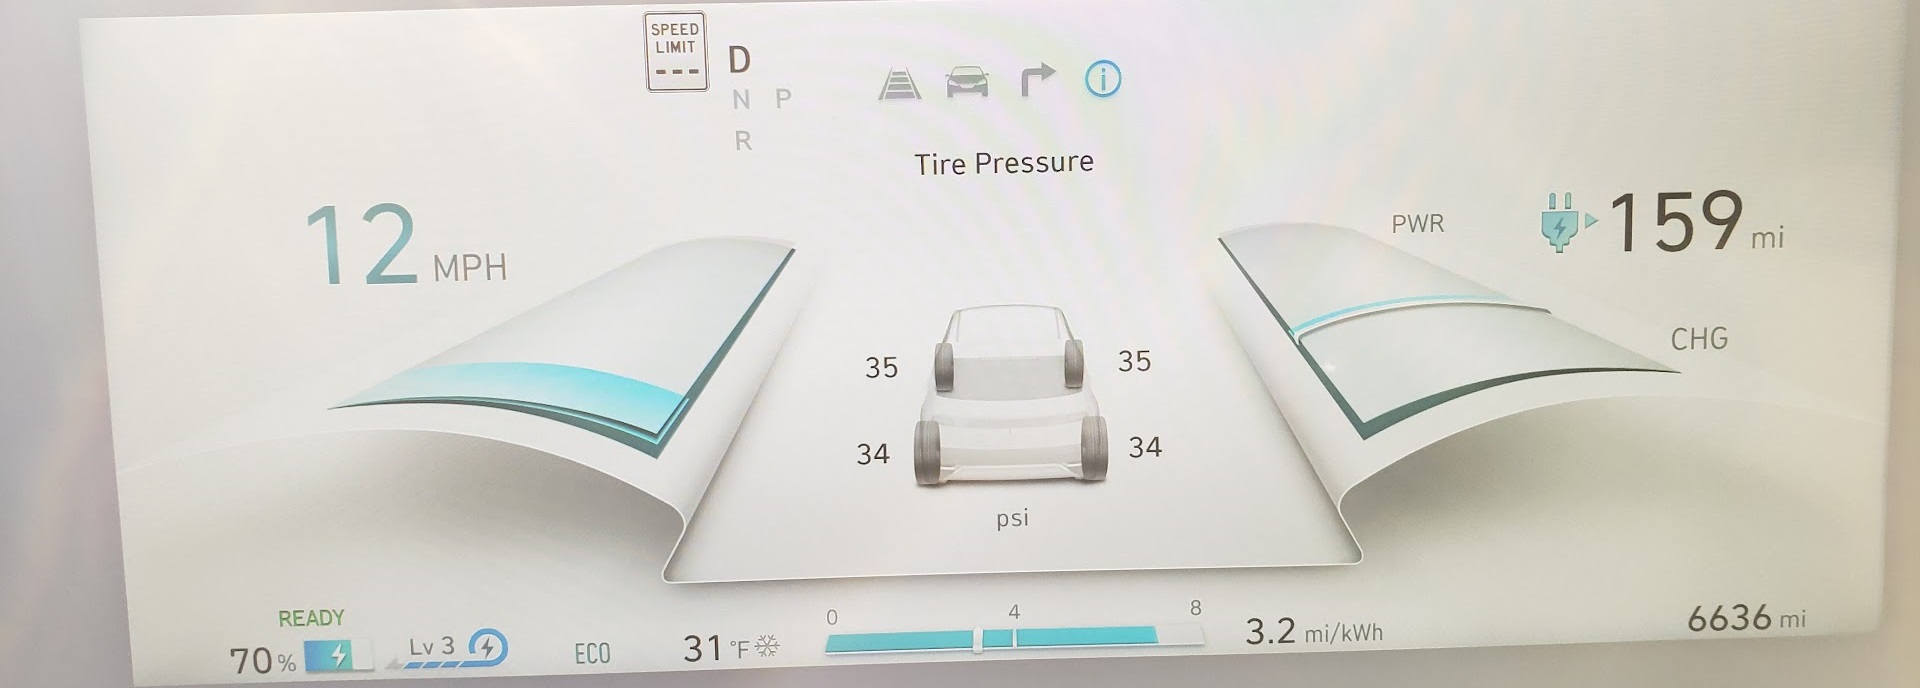 Image of Hyundai tire pressure readout by John Goreham